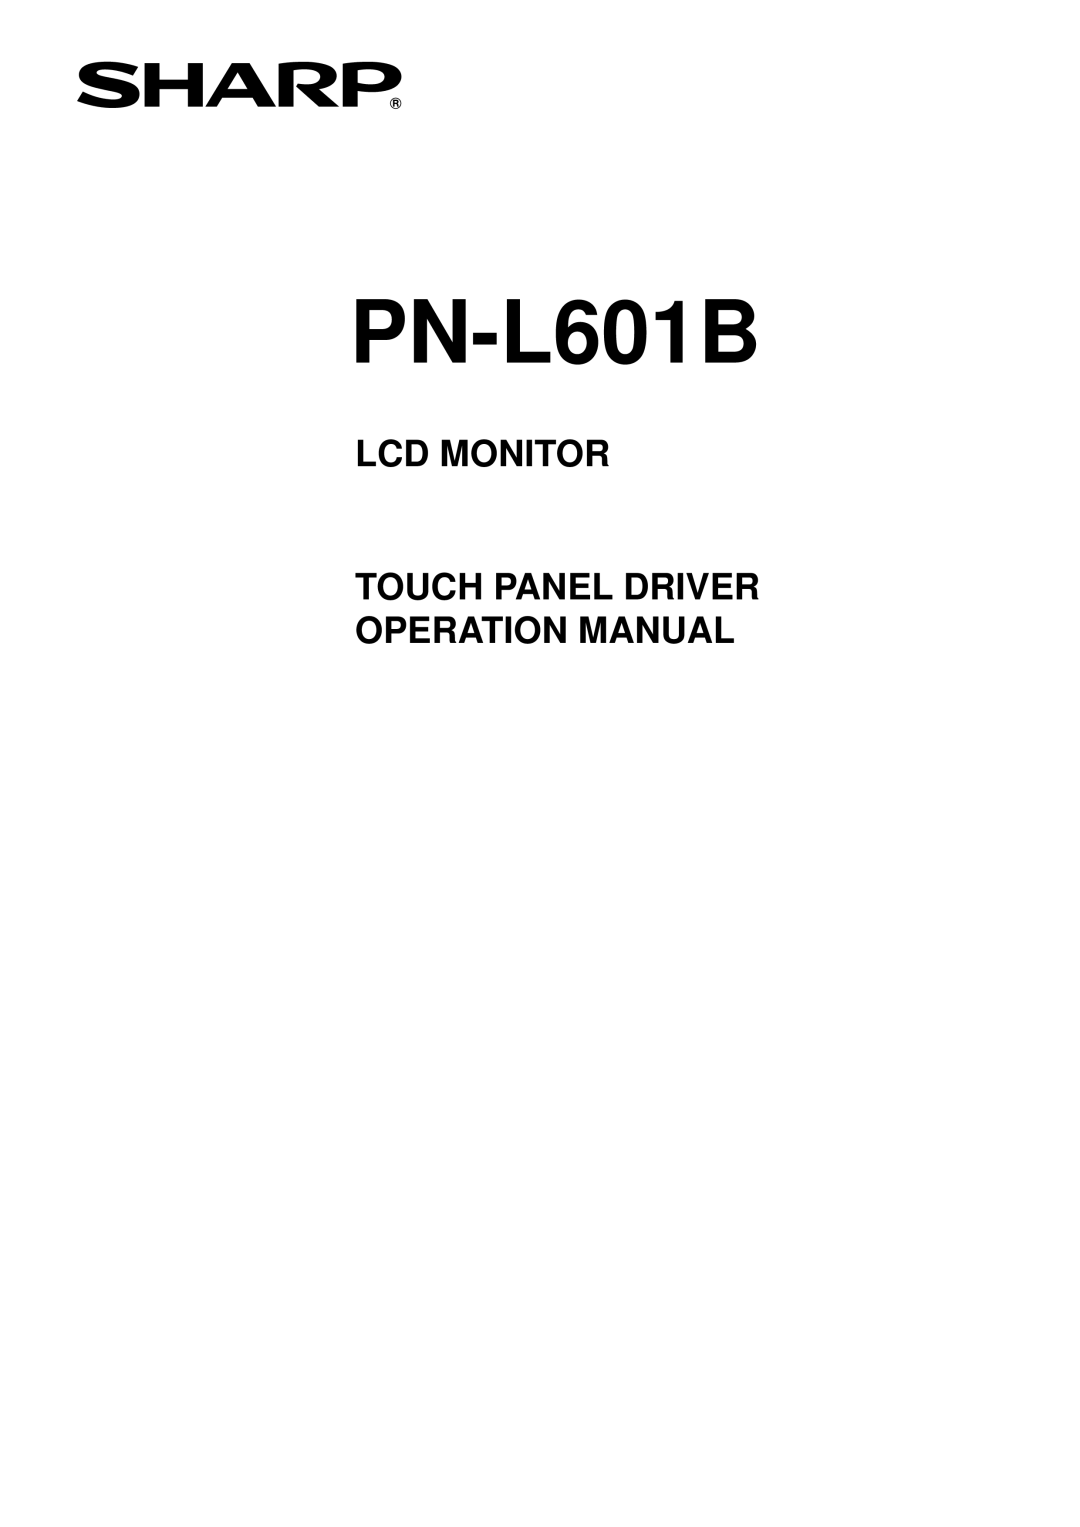 Sharp PNL601BPKG operation manual PN-L601B, Lcd Monitor 